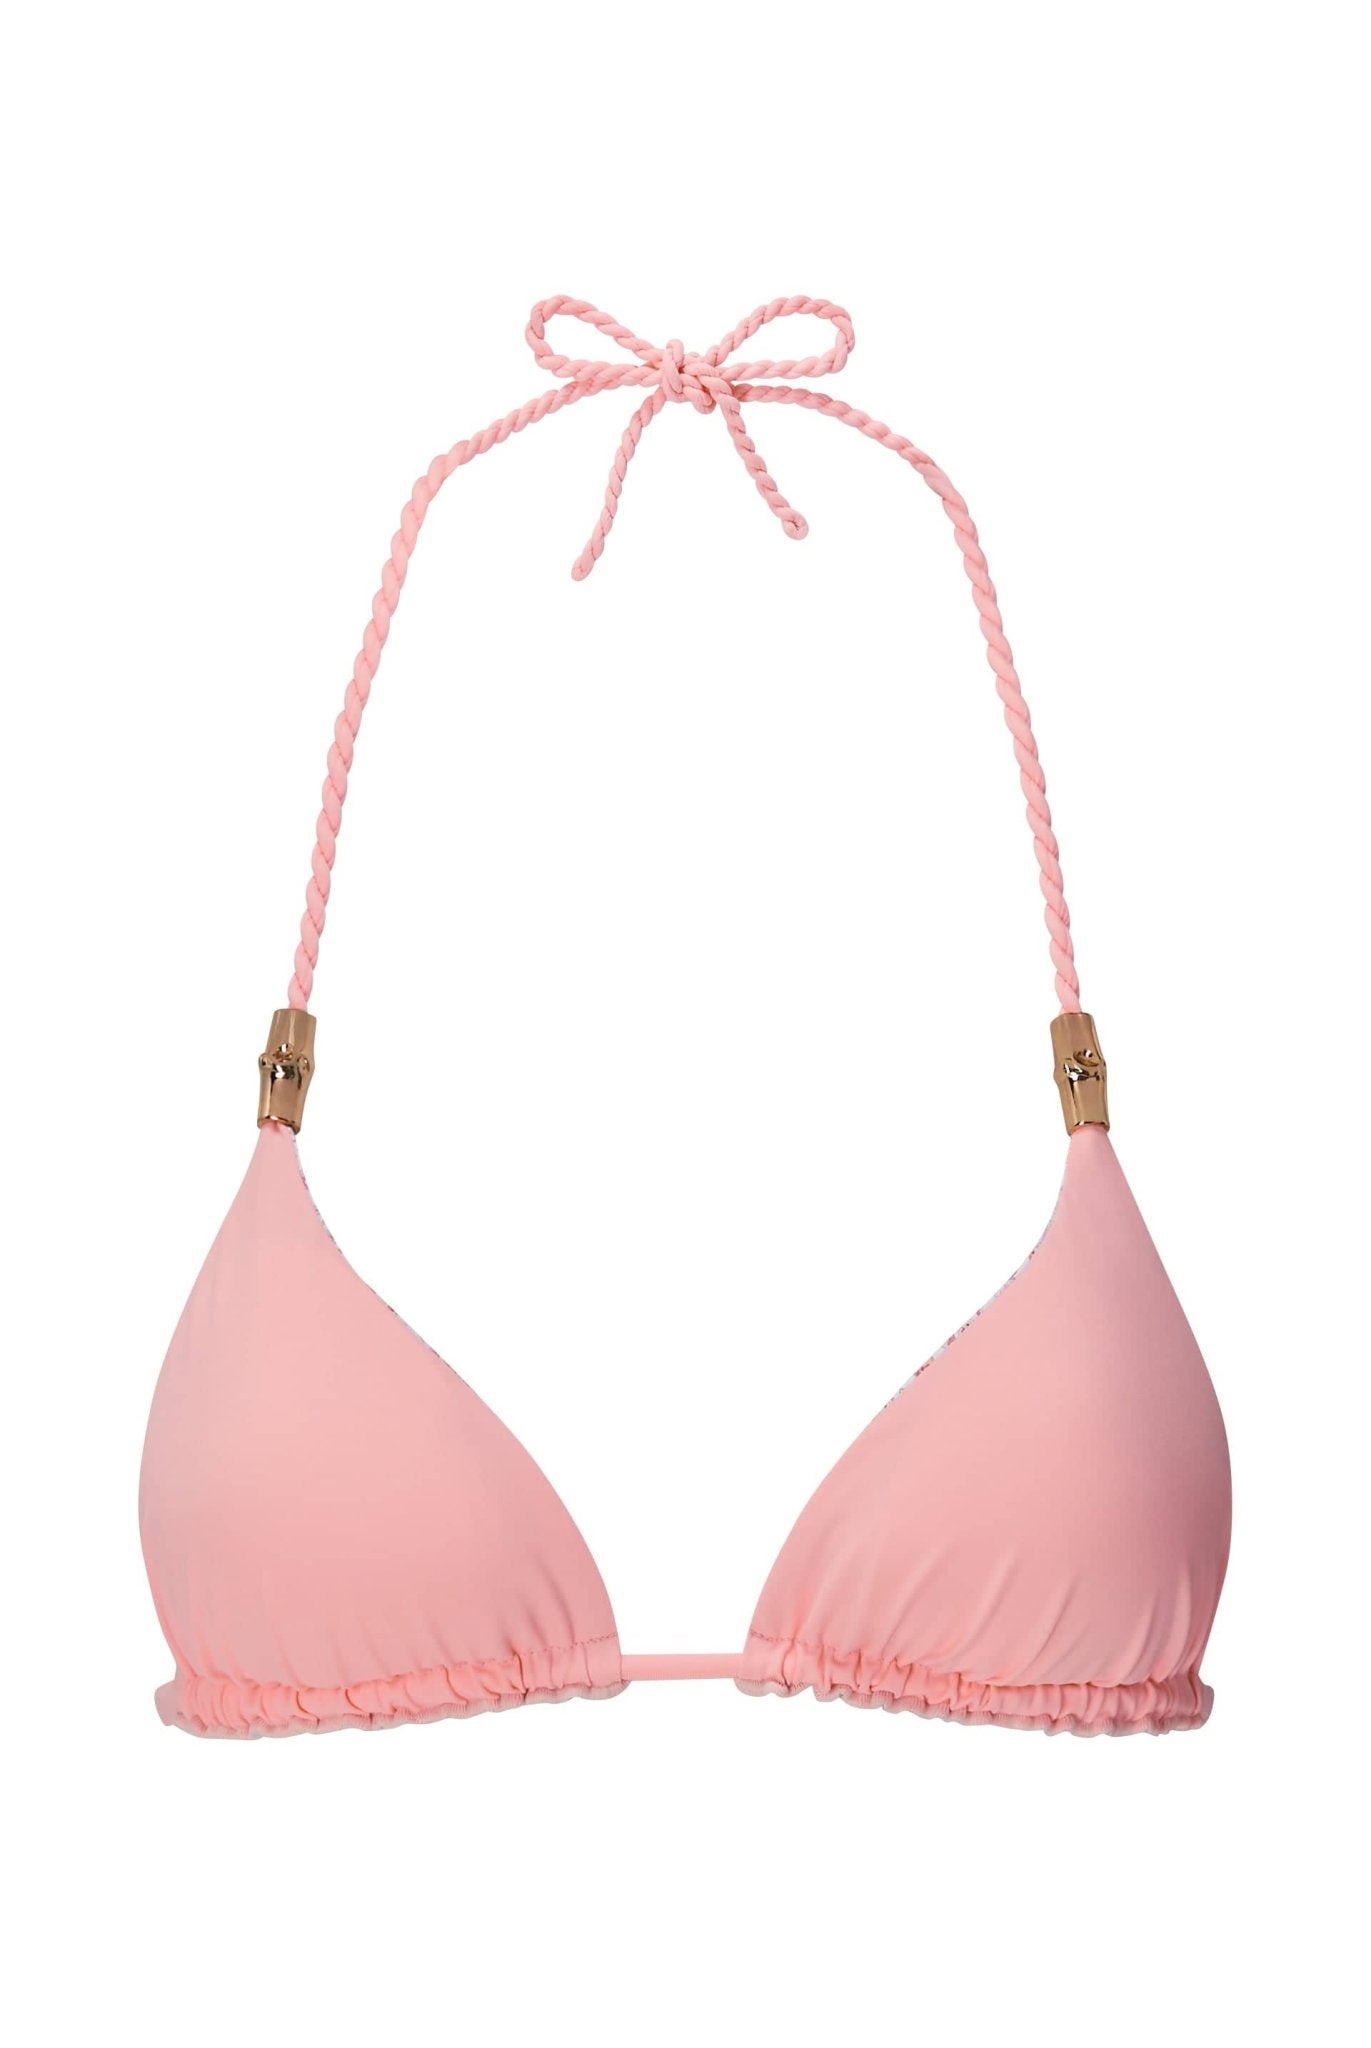 Muskmelon Bay Reversible Triangle Top In Pink - Heidi Klein - UK Store